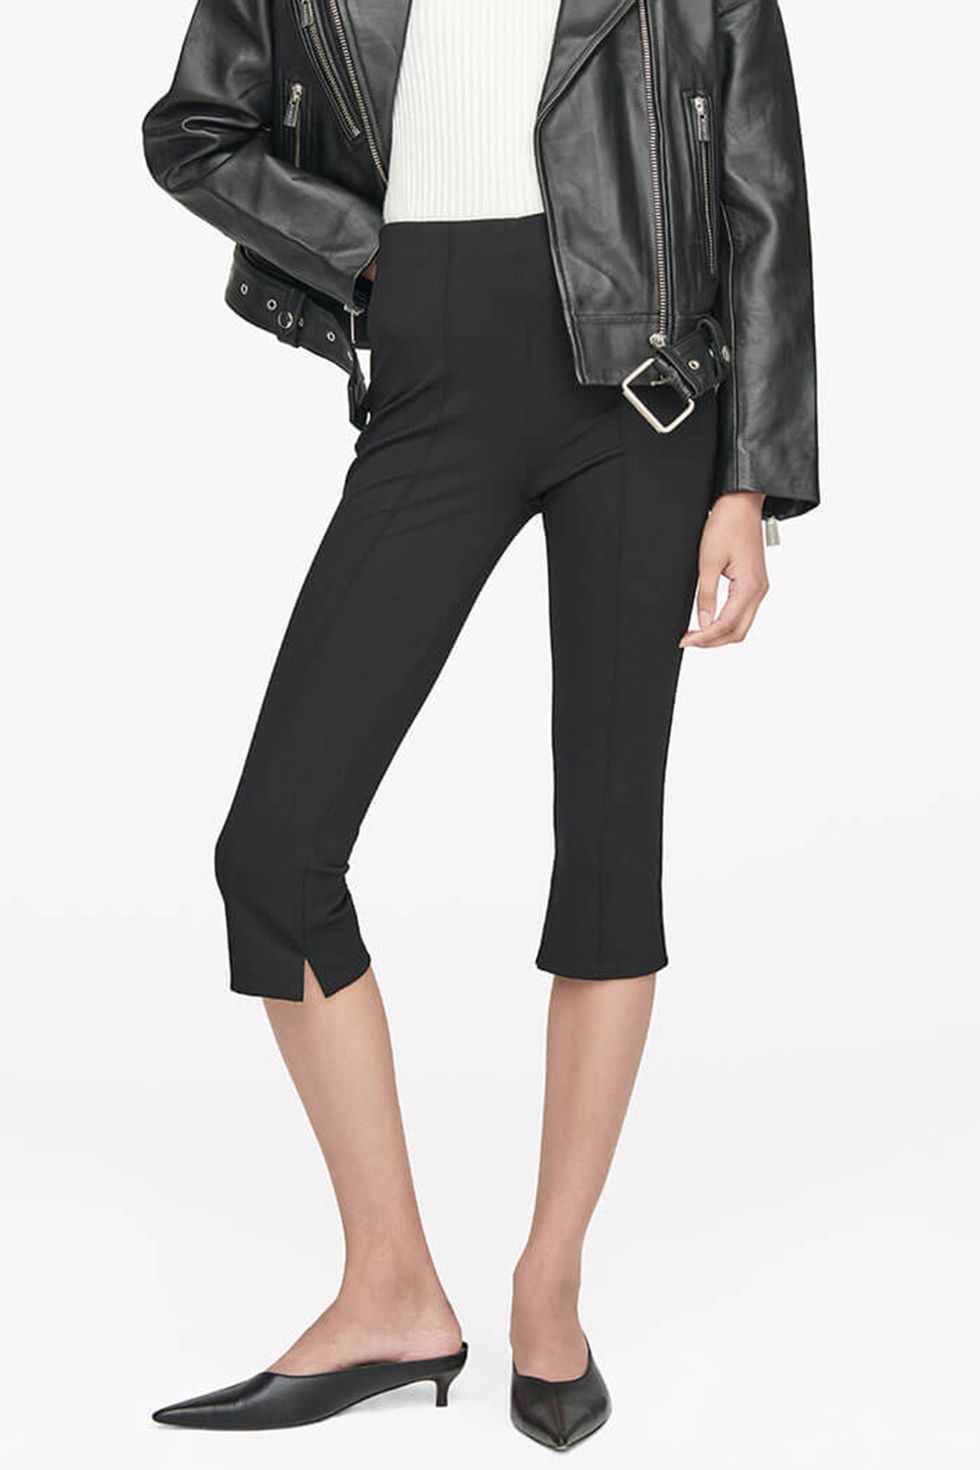 Fashion (Black)Capri Pants Lace Stretchy Women Calf Length Mid